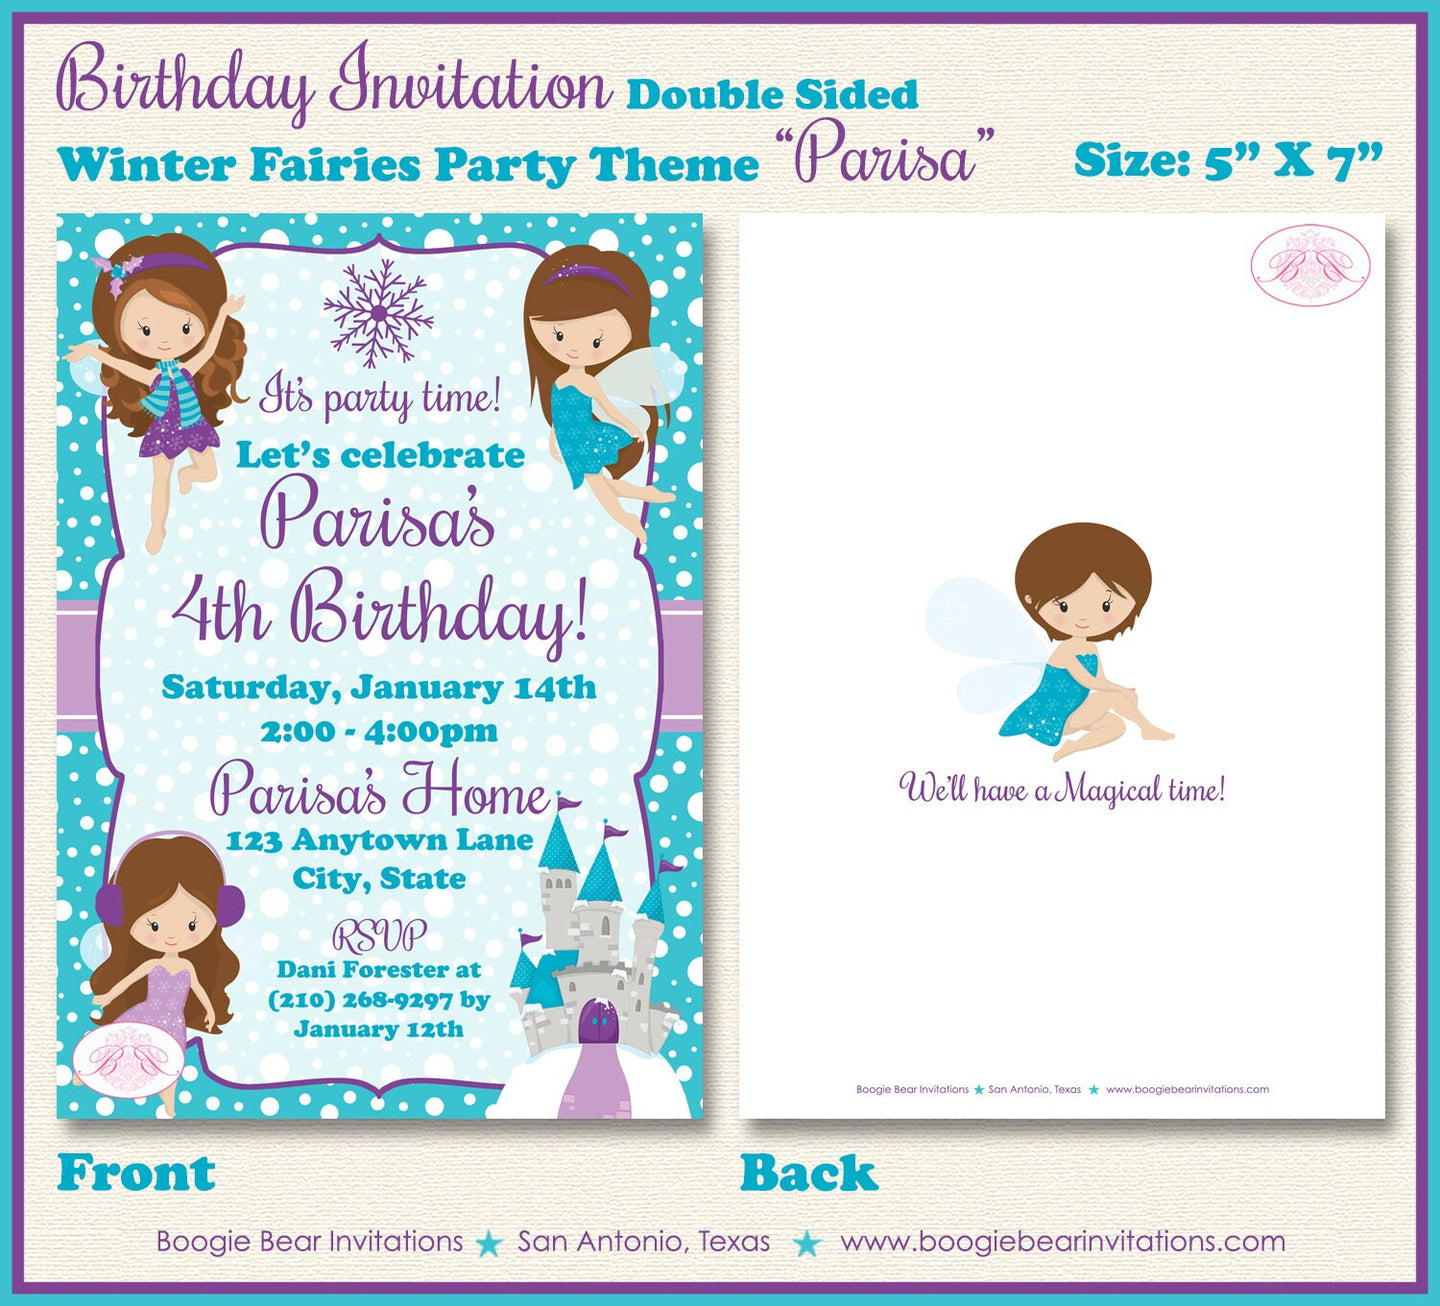 Winter Fairy Girl Birthday Party Invitation Purple Blue Christmas Snowflake Boogie Bear Invitations Parisa Theme Paperless Printable Printed